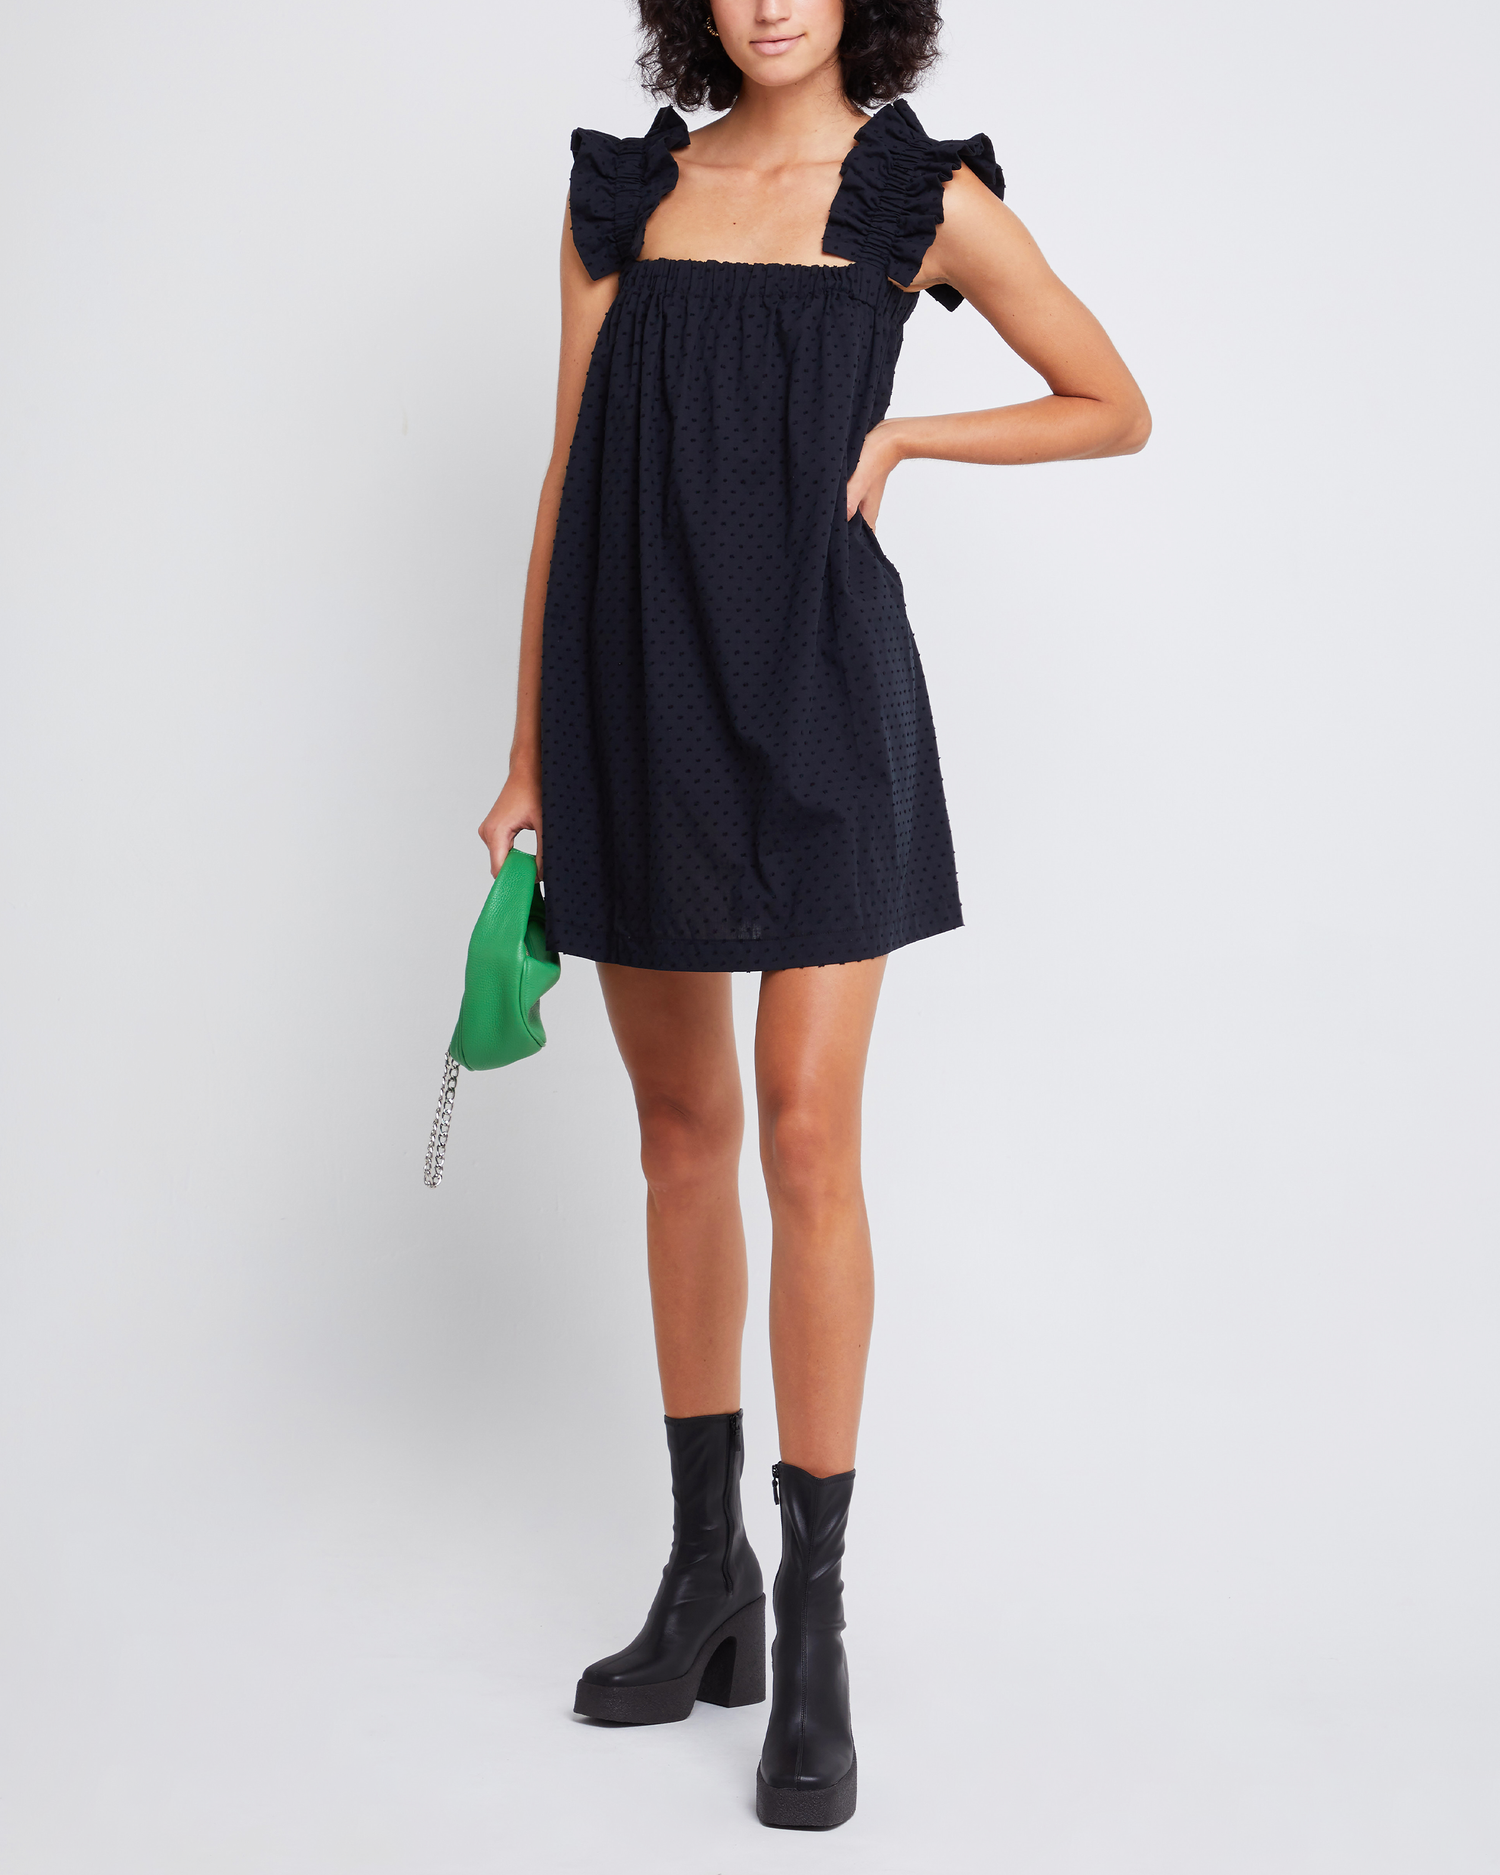 Fourth image of Nivia Dress, a black mini dress, ruffle sleeves, cap sleeves, flowy, relaxed